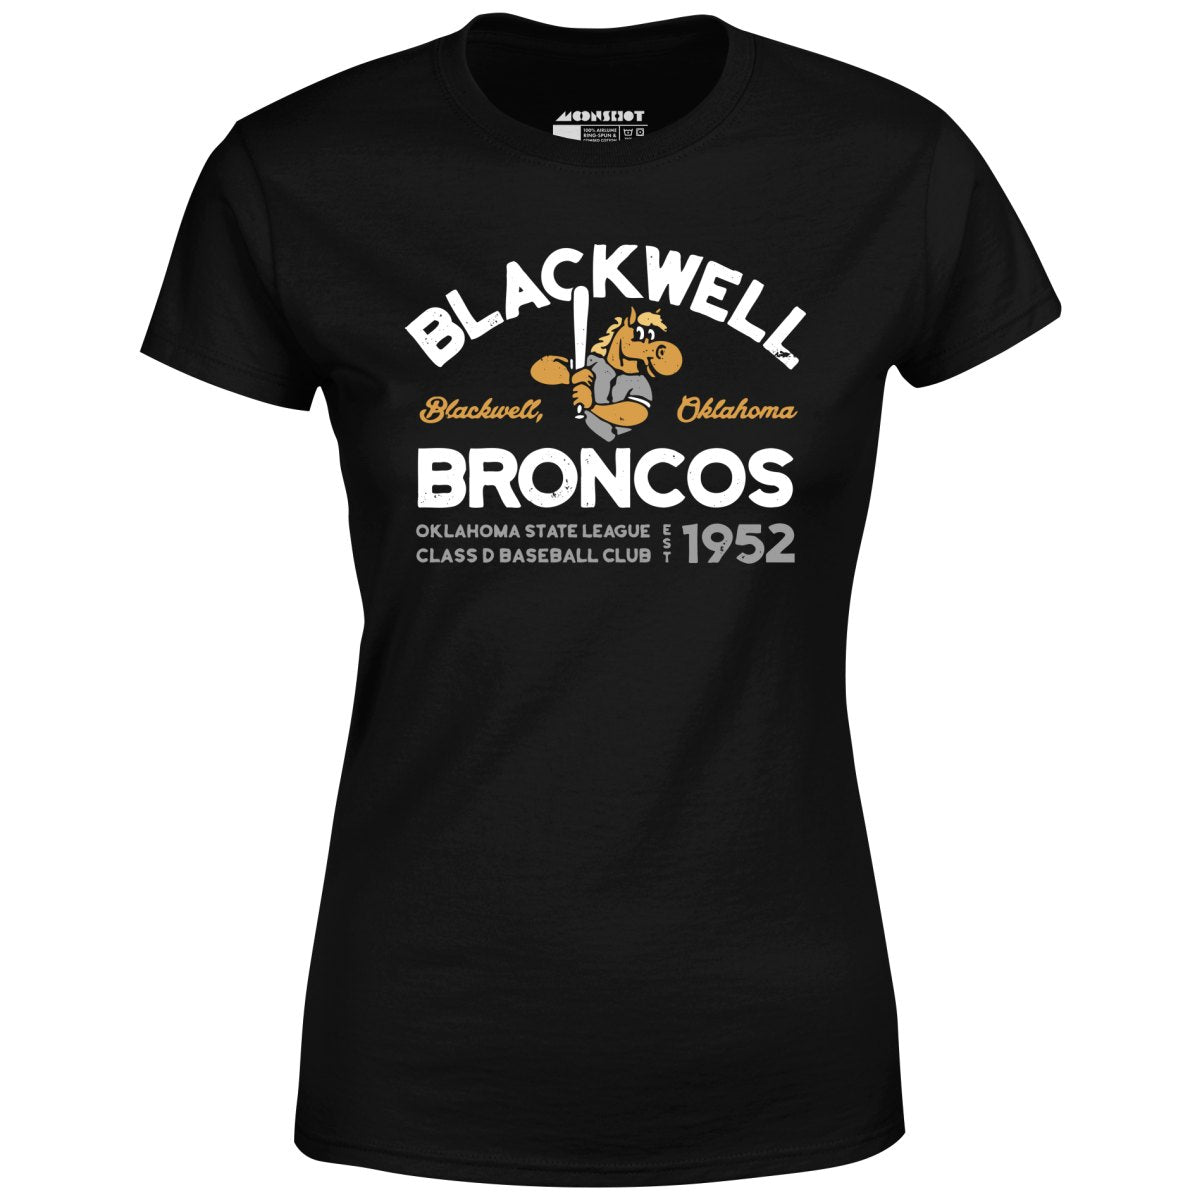 Blackwell Broncos - Oklahoma - Vintage Defunct Baseball Teams - Women's T-Shirt